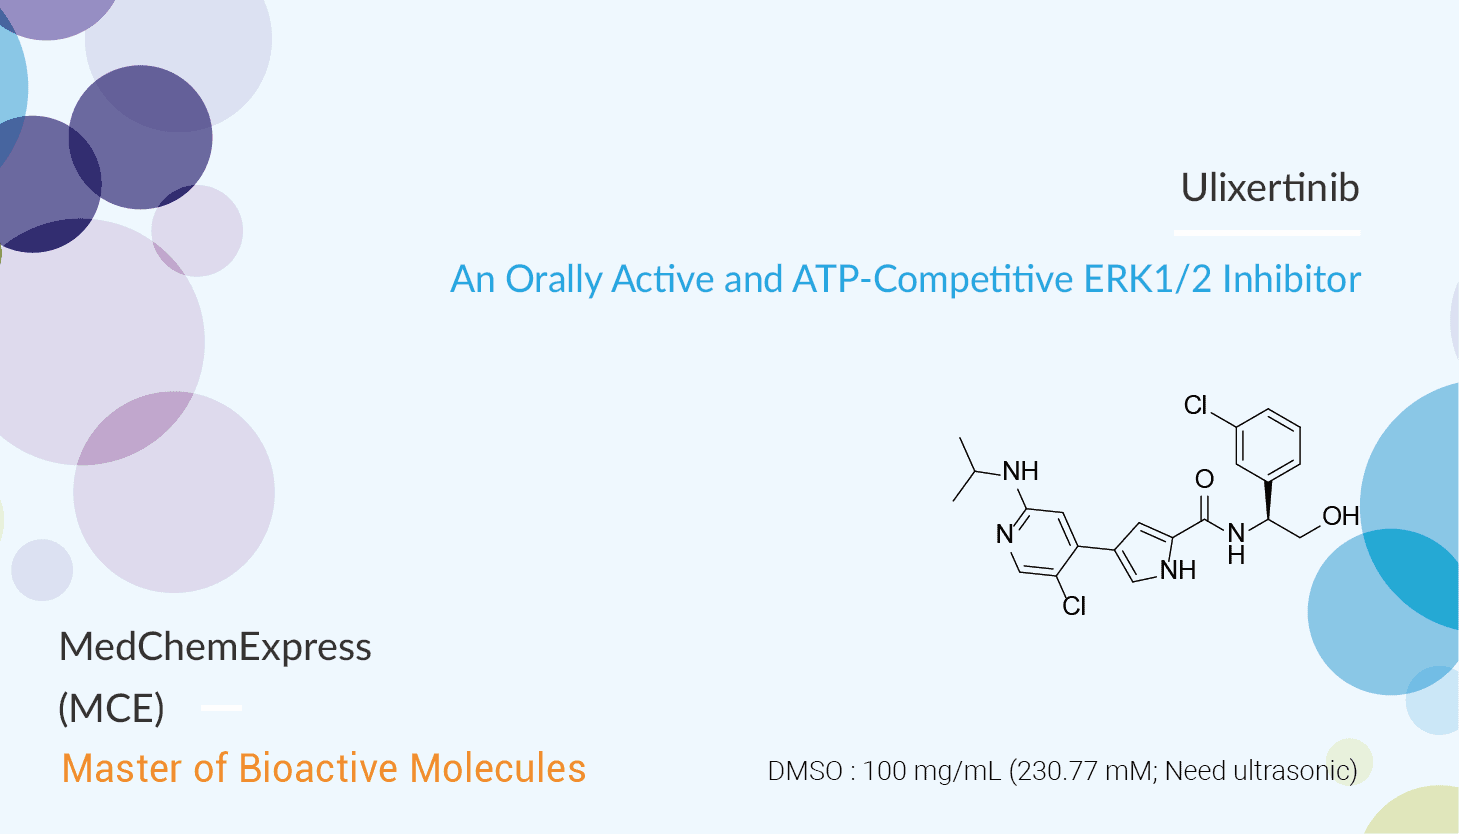 Ulixertinib 画板 1 - Ulixertinib is an Orally Active and ATP-Competitive ERK1/2 Inhibitor